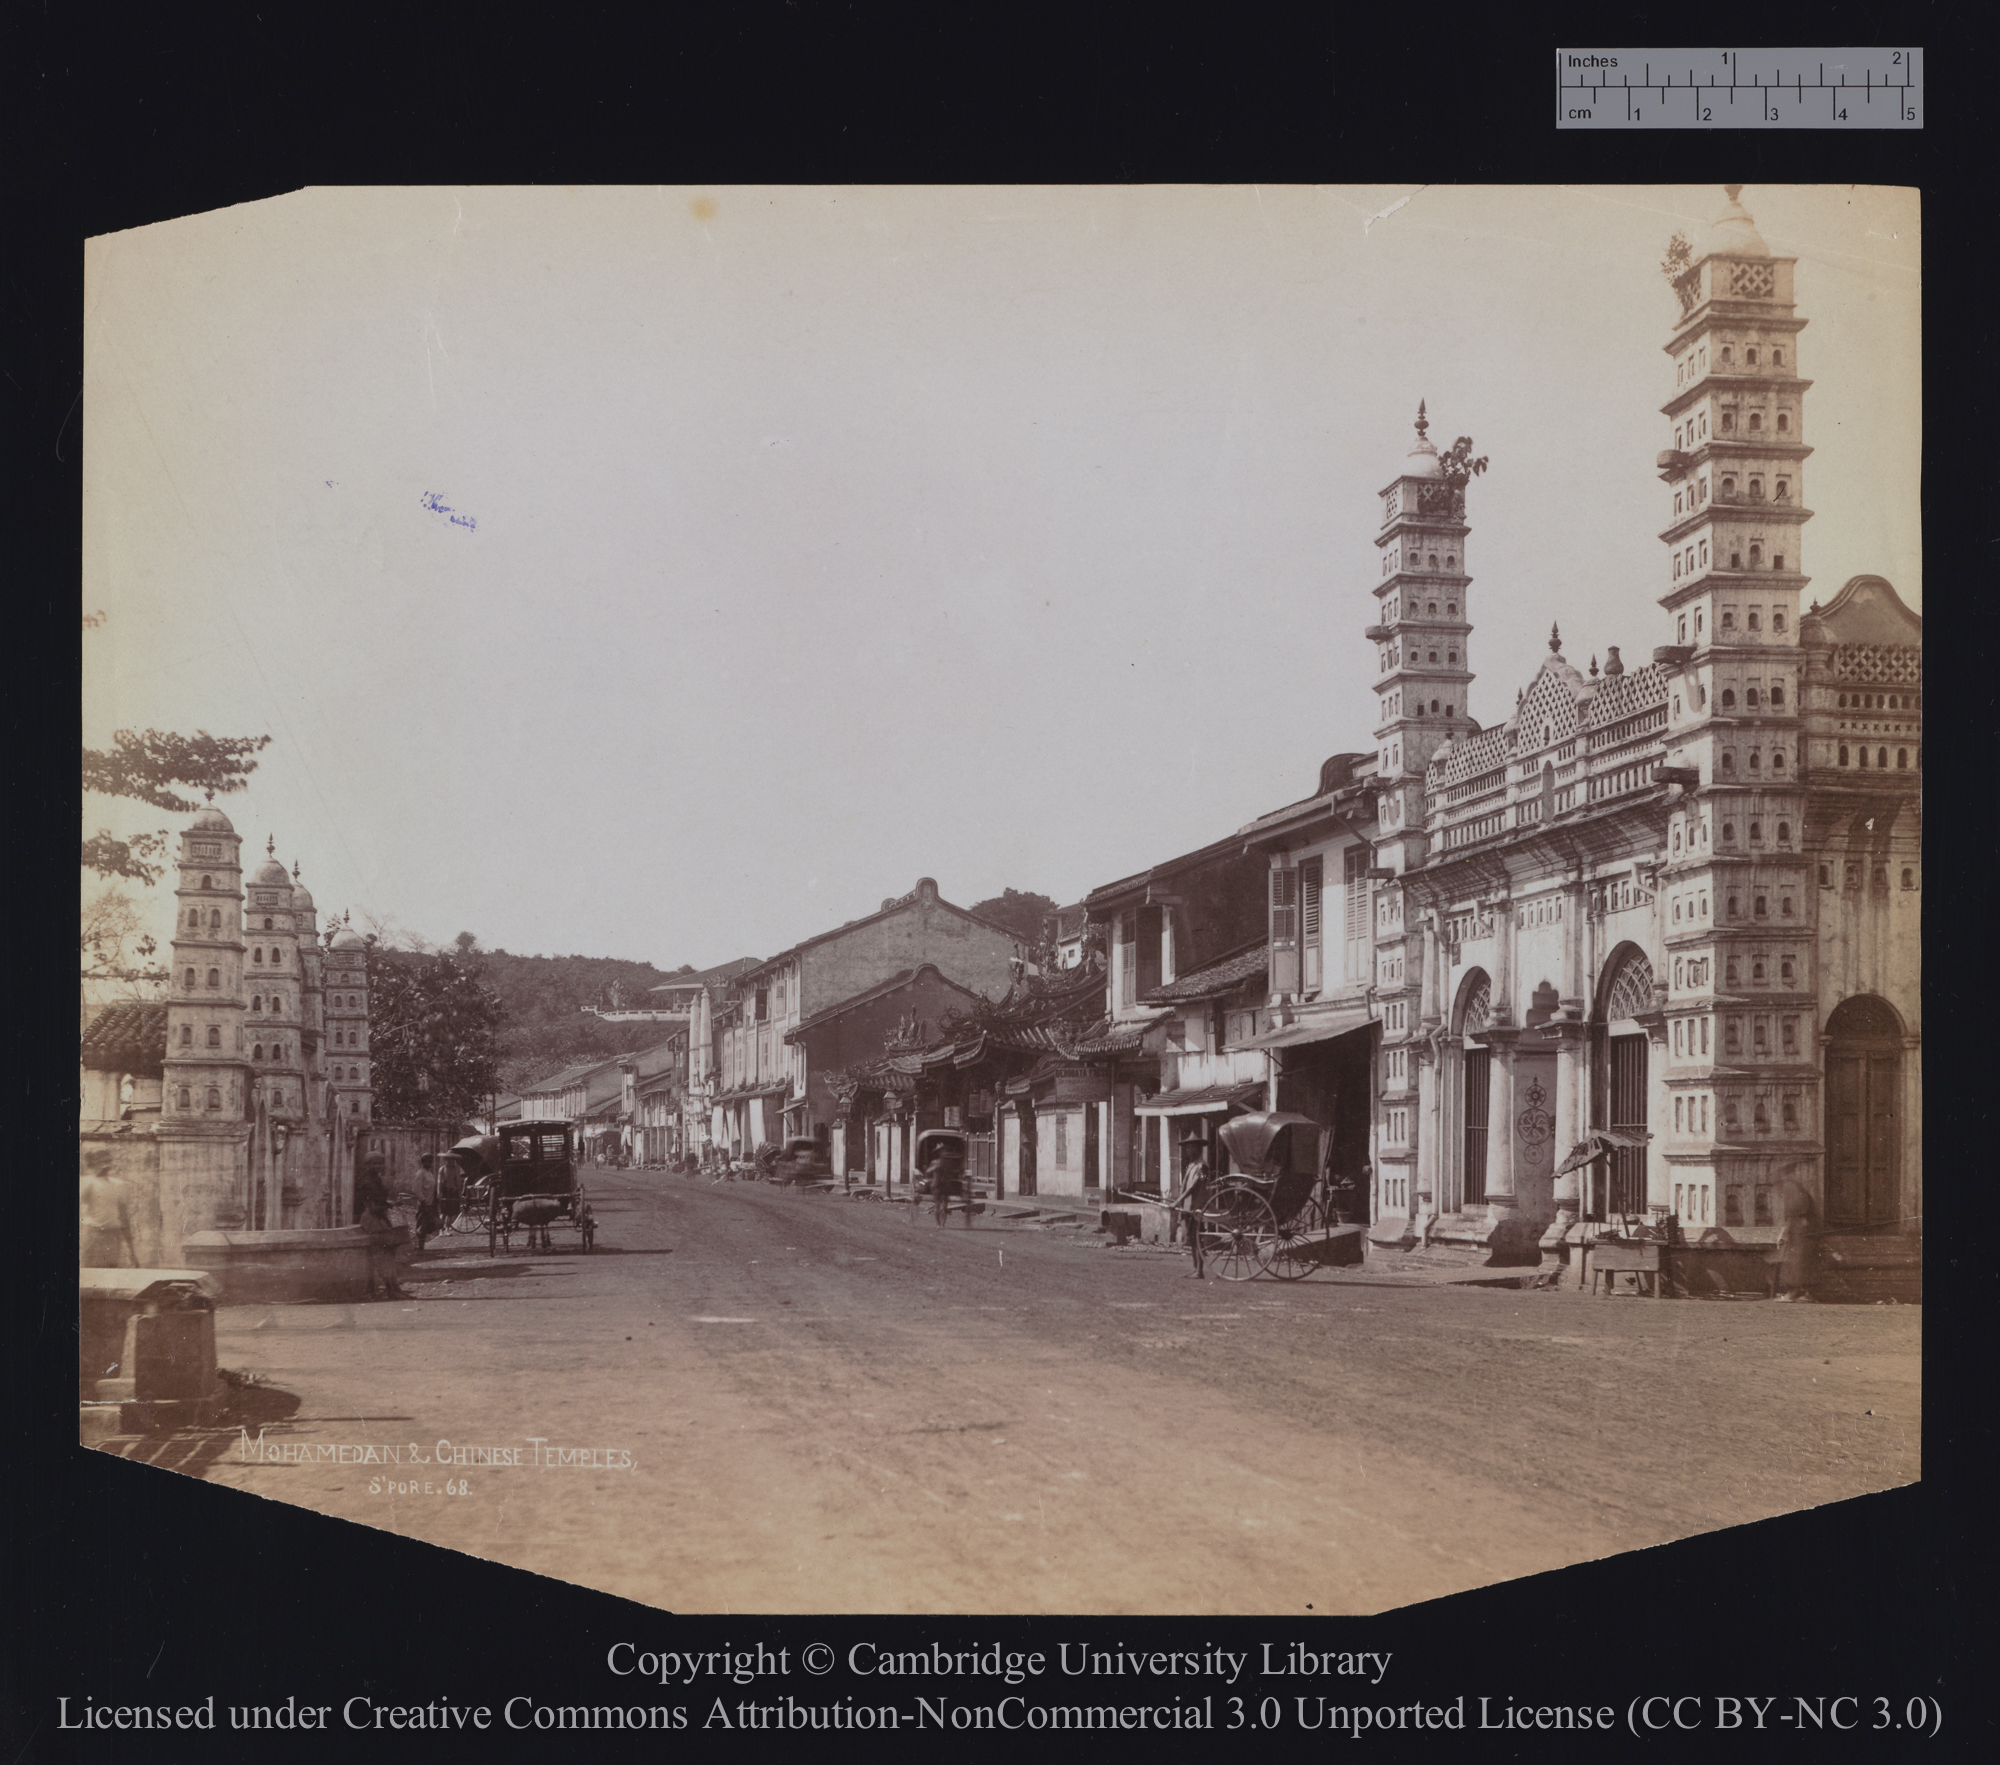 Mohamedan [i.e. Islamic] and Chinese temples, Spore [i.e. Singapore], 1900